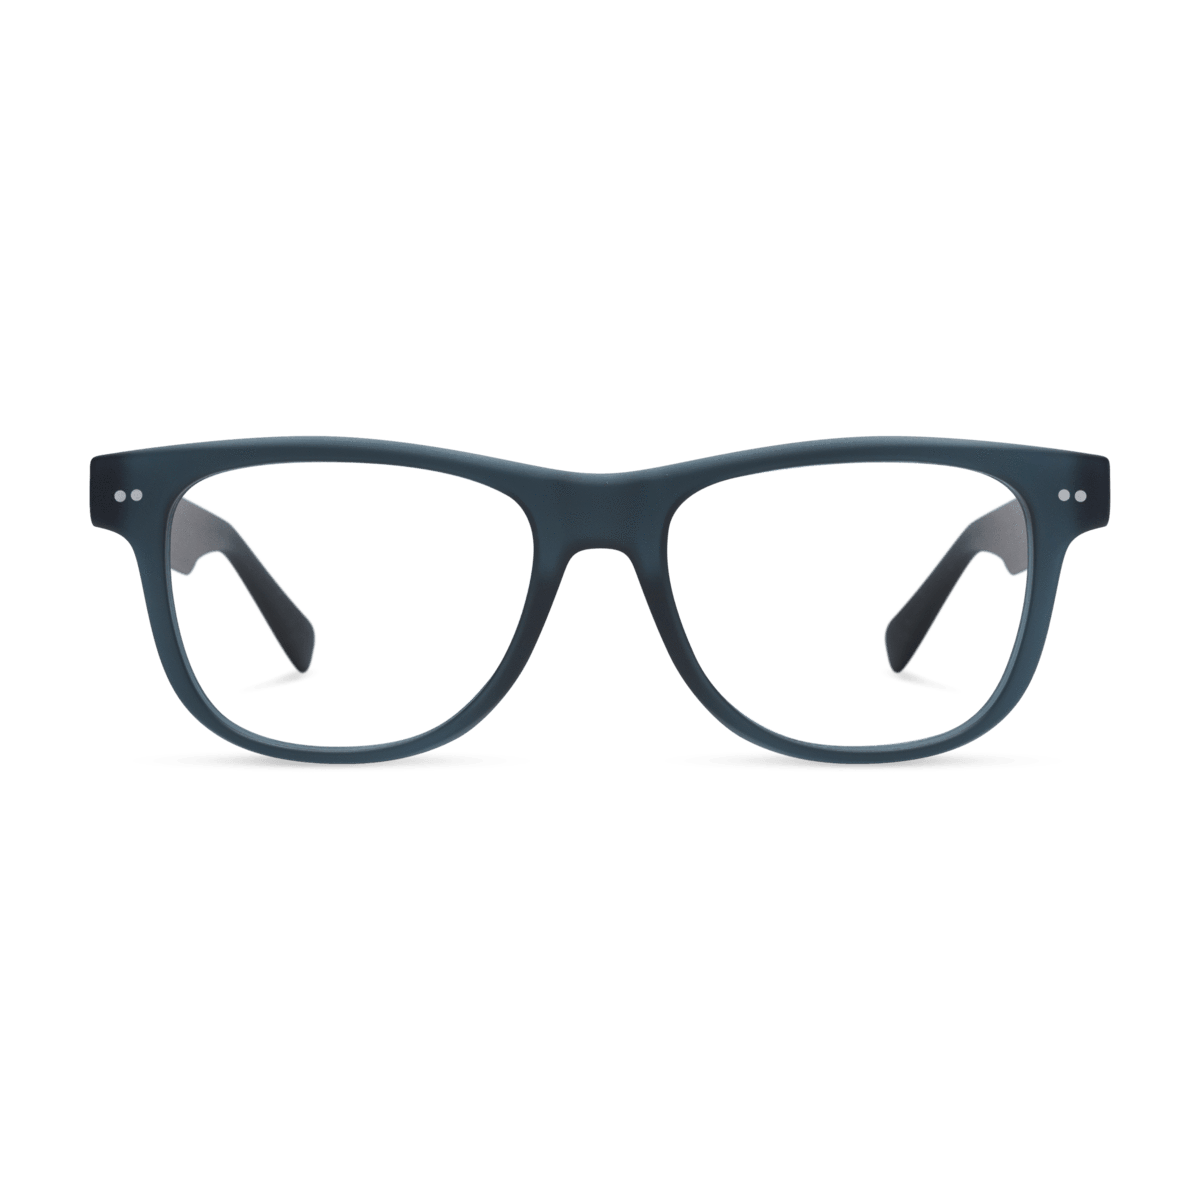 Sullivan Blue Light Eyeglasses LOOK OPTIC Navy +0.00 